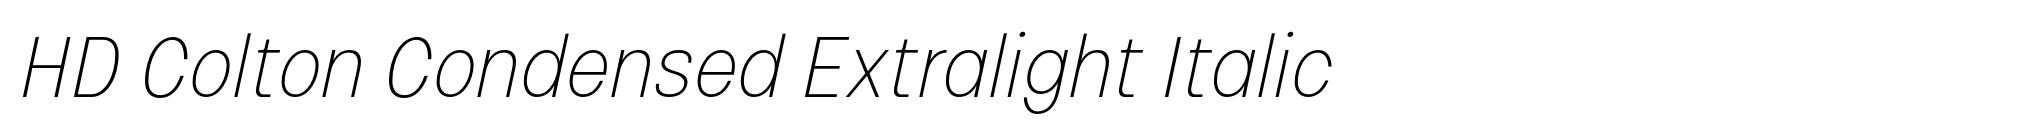 HD Colton Condensed Extralight Italic image